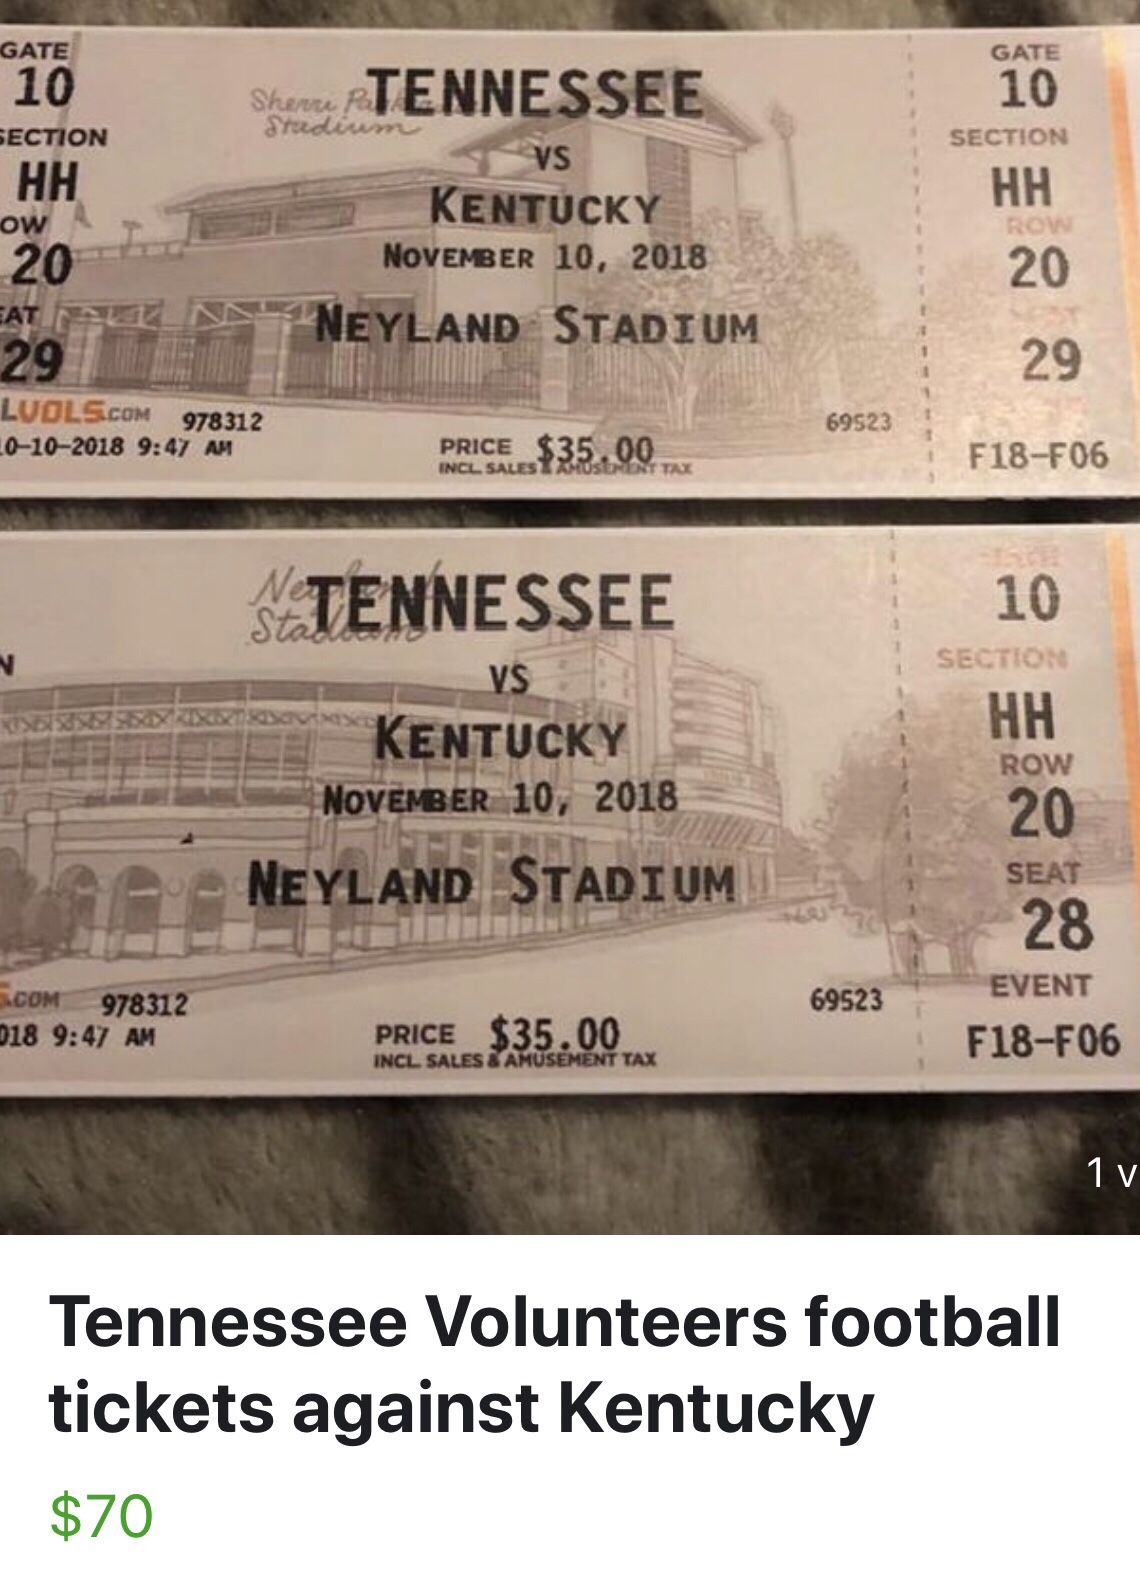 2 UT football tickets against Kentucky